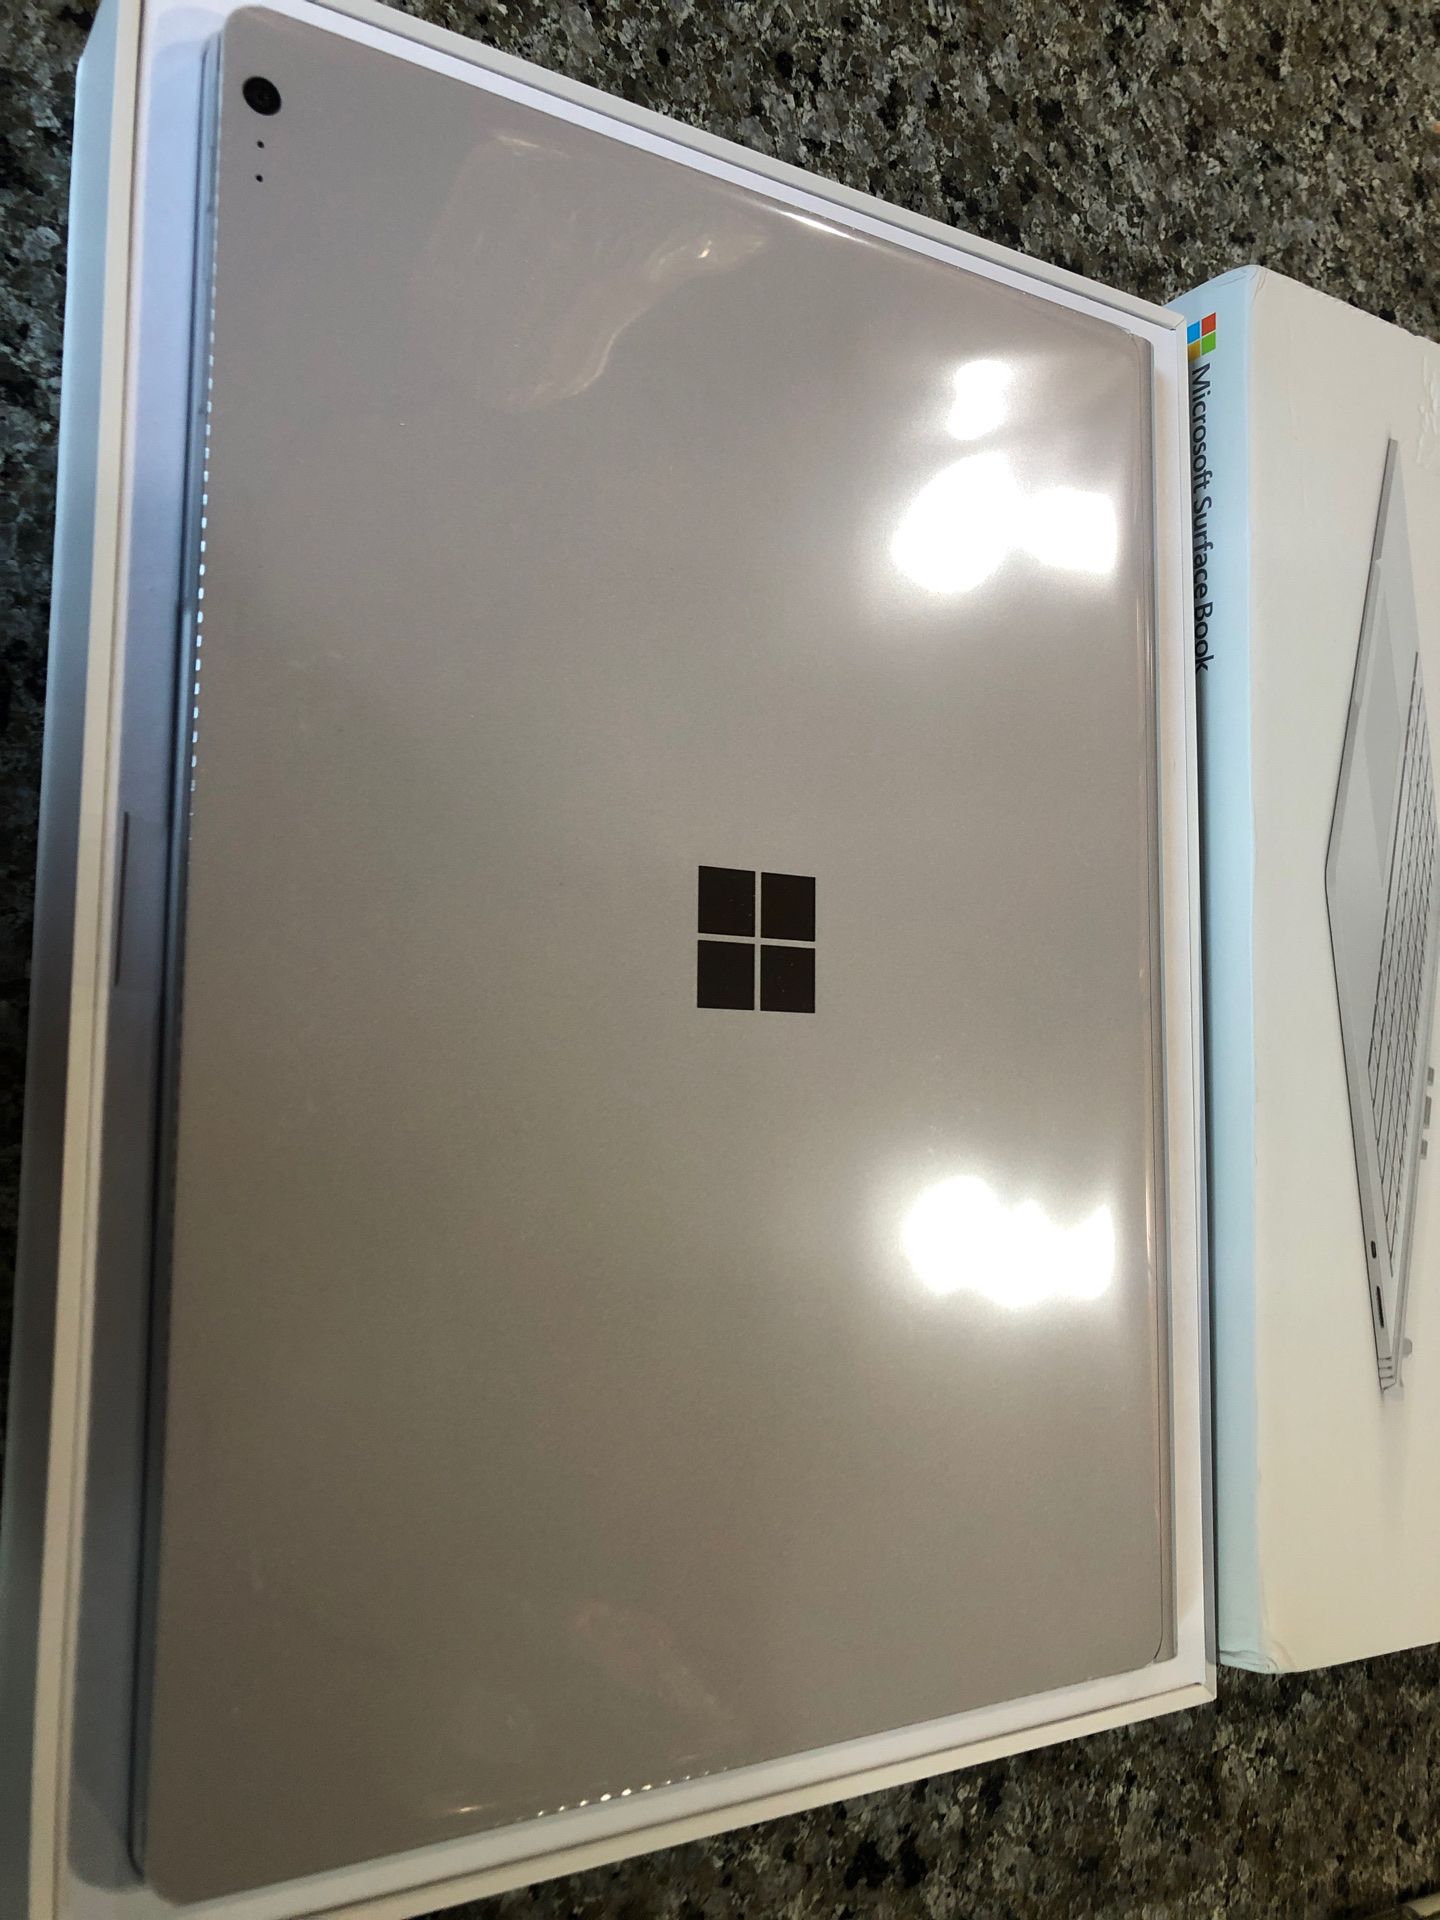 Microsoft surface book 2 sealed